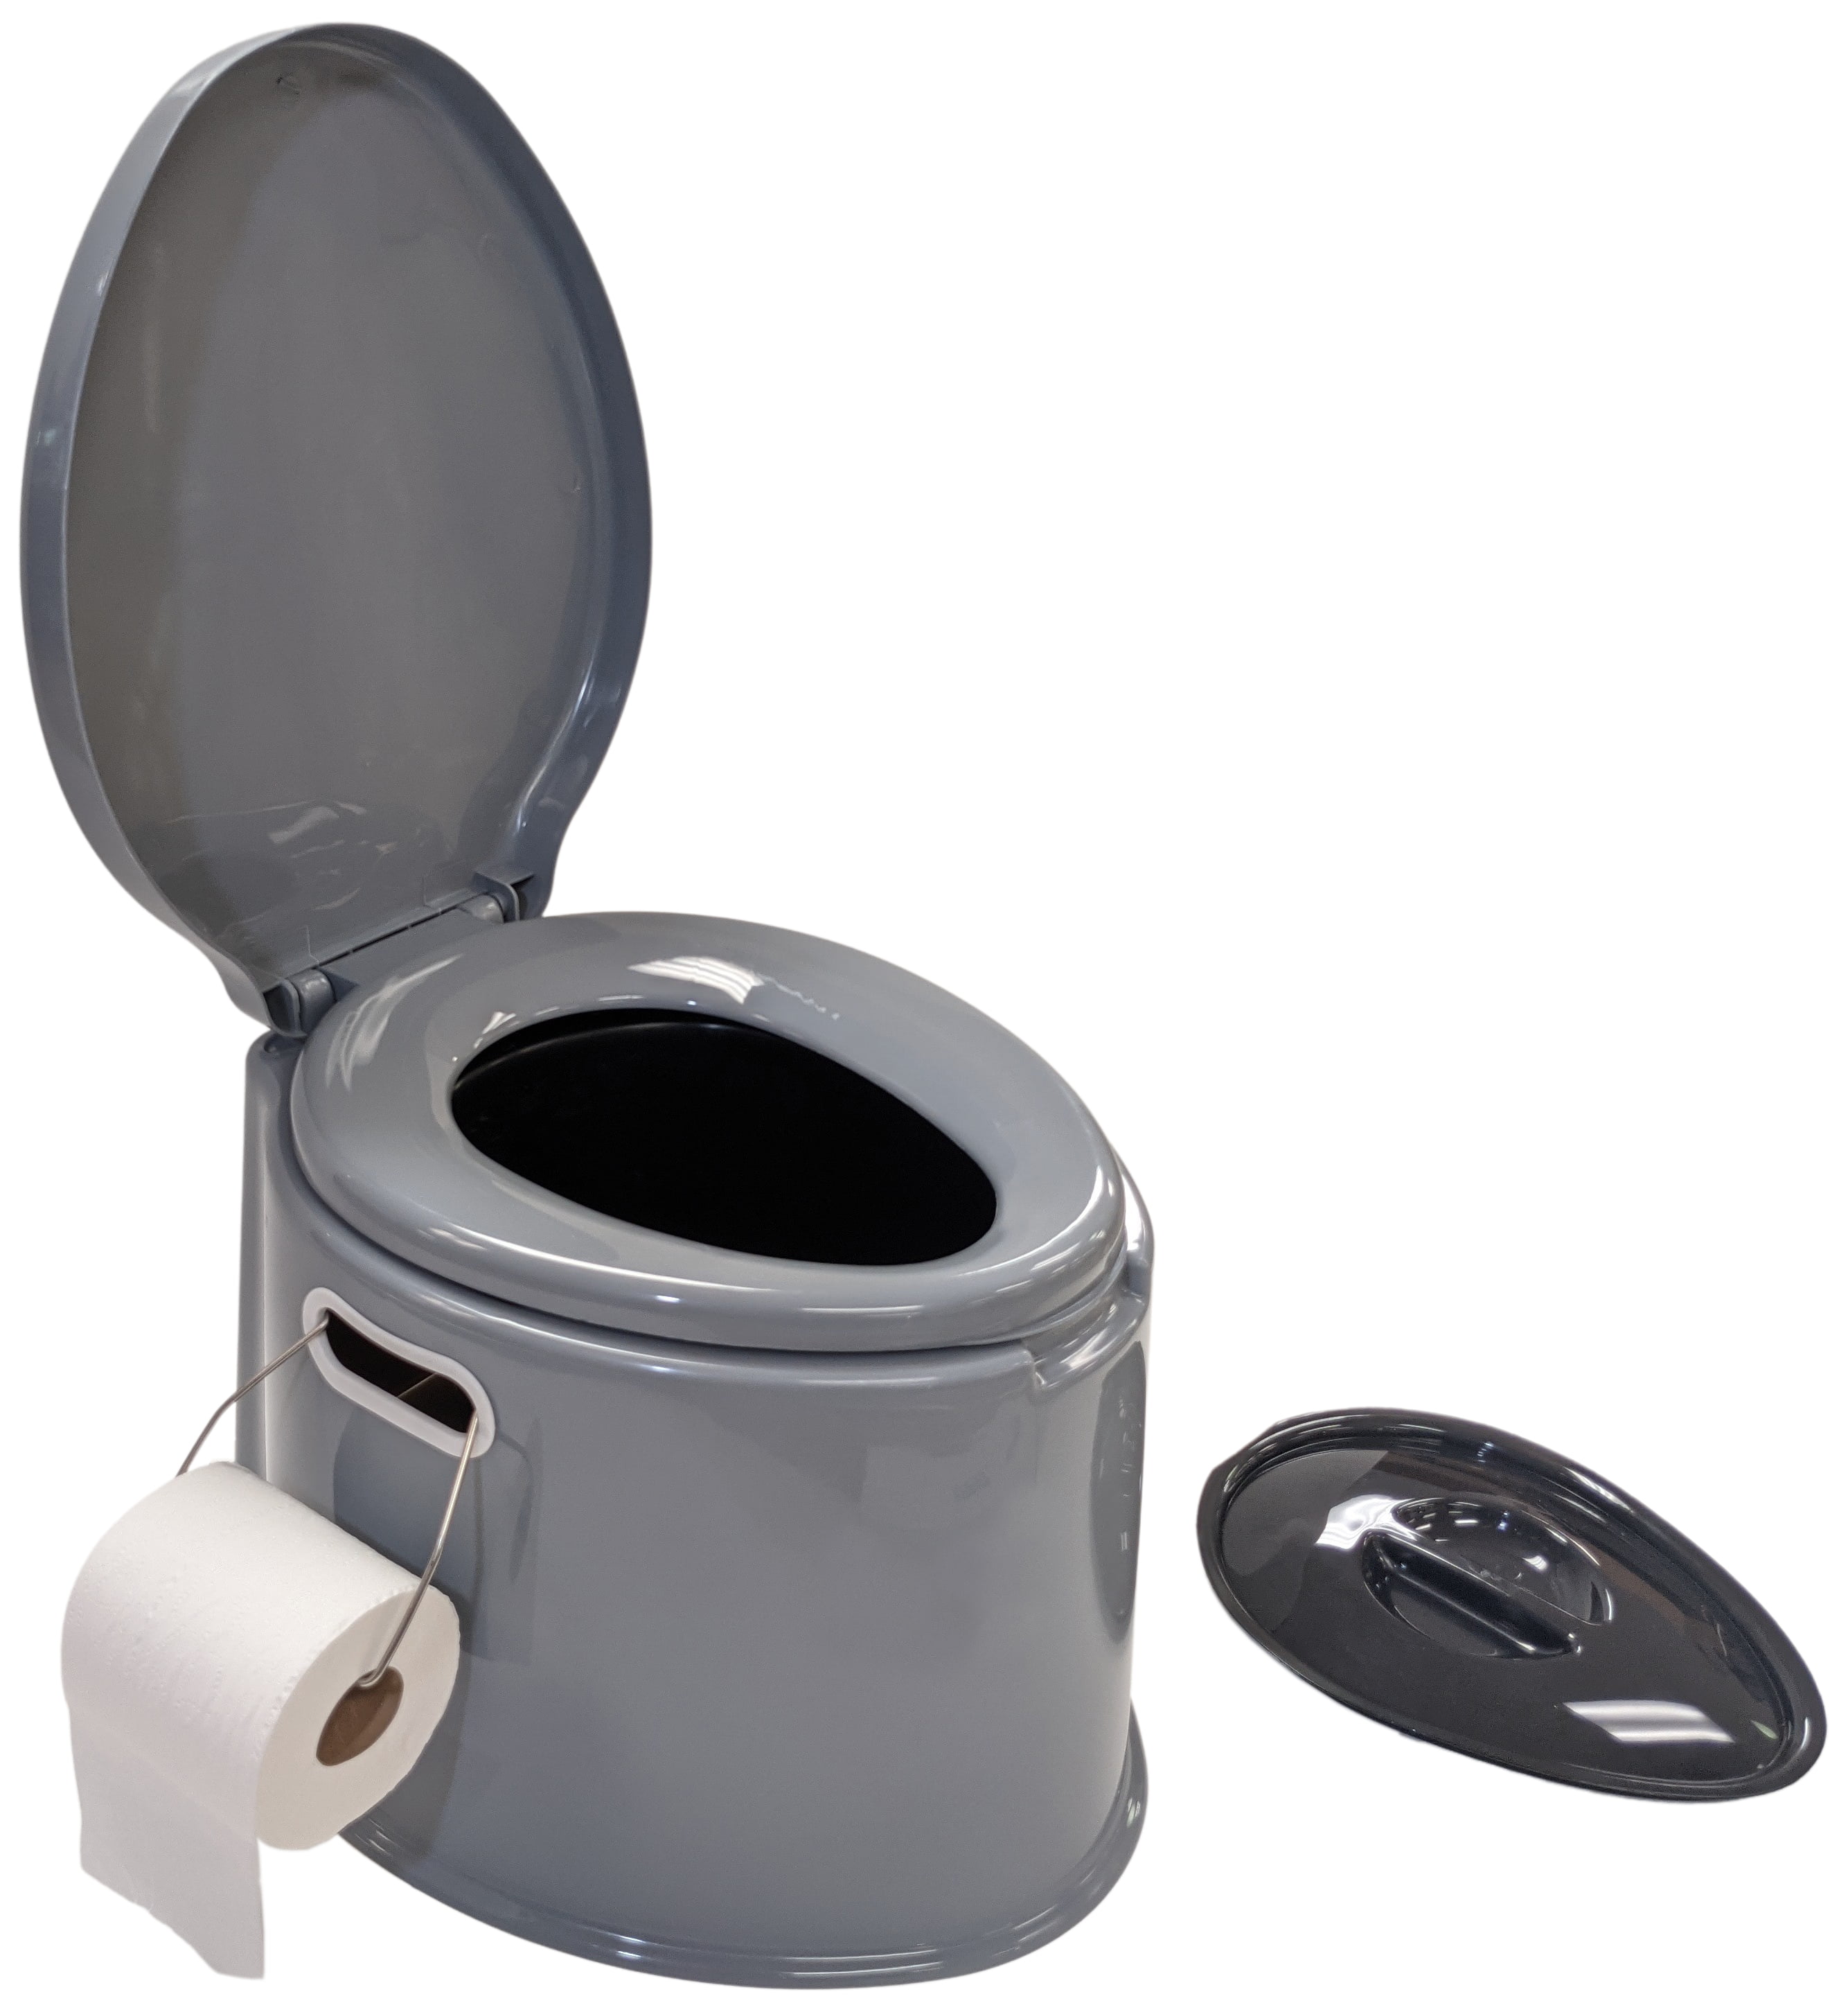 5l Toilet Portable caravan Motorhome camping compact potty loo boat festival NEW 